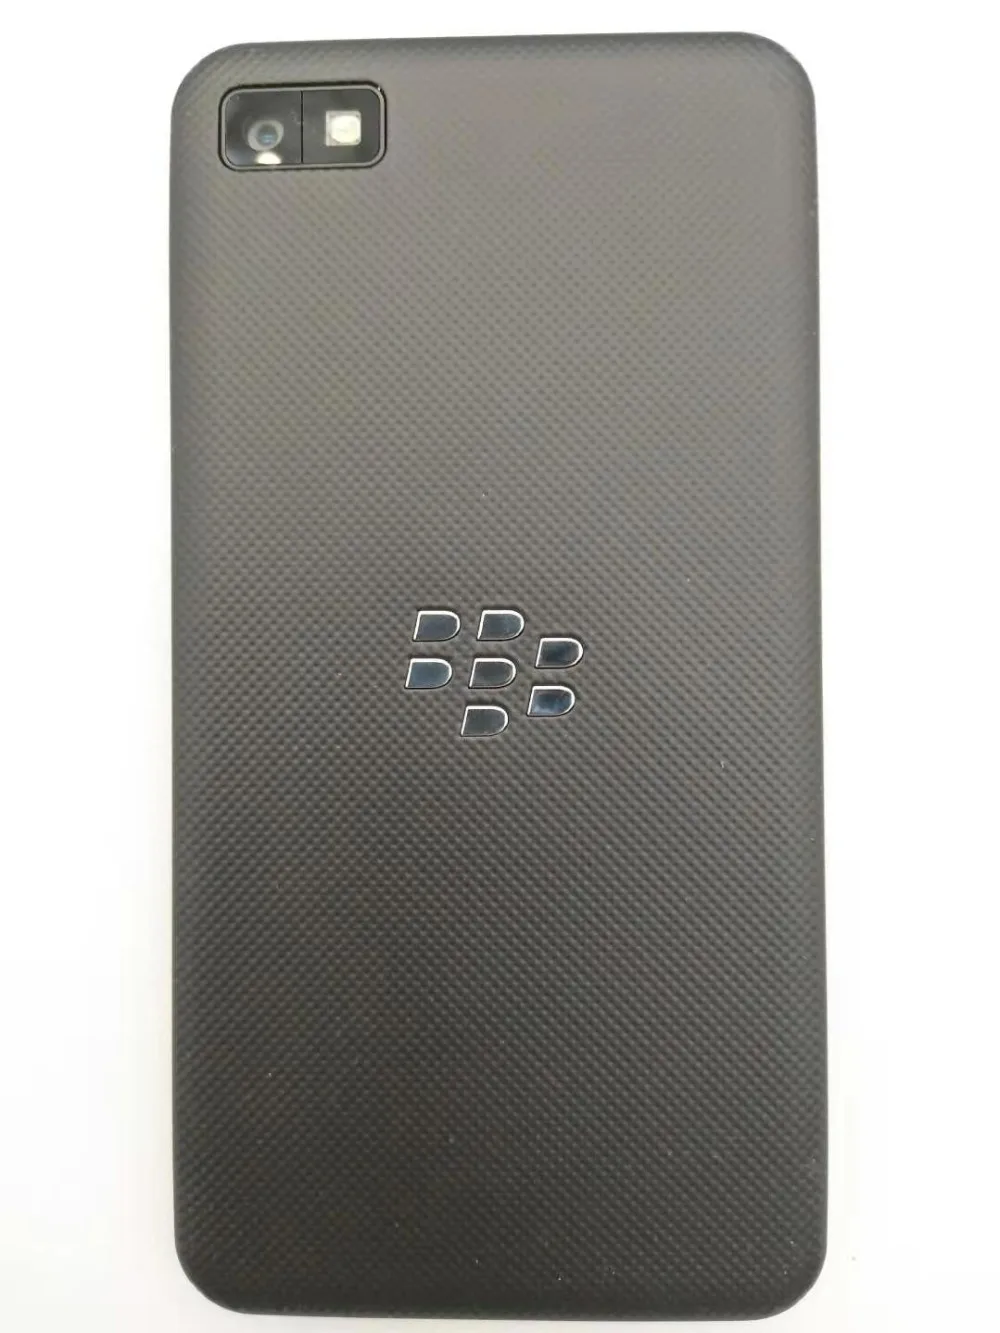 blackberry z10 refurbished blackberry z10 dual core gps wifi 8mp 4 2 2gb ram 16gb rom unlocked phone free shipping free global shipping